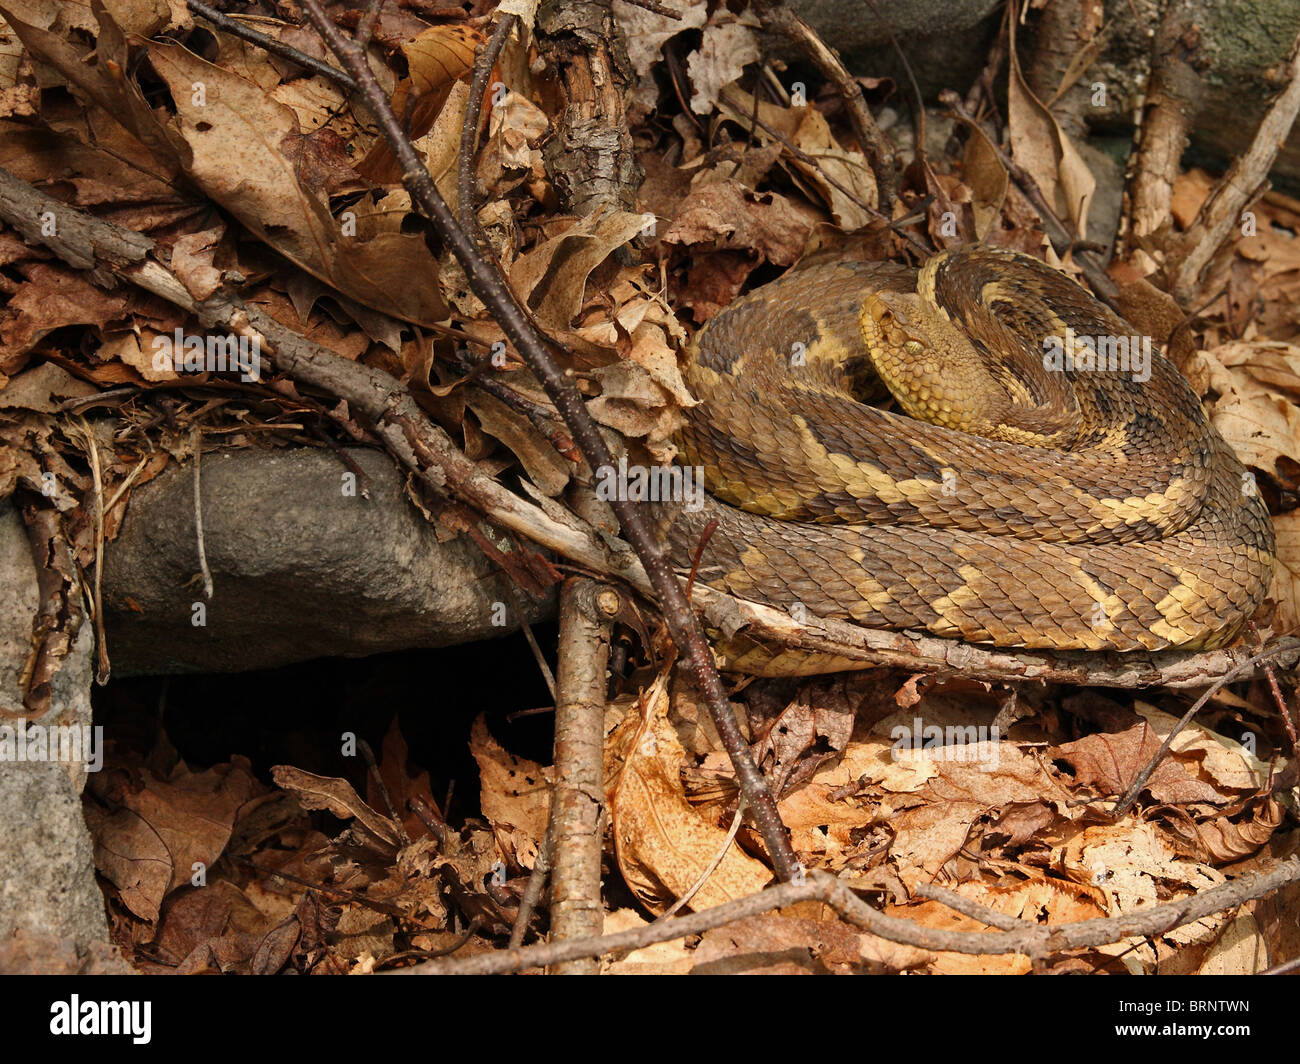 Timber Rattlesnake (Crotalus horridus) at Entrance to its Hibernation Burrow Stock Photo